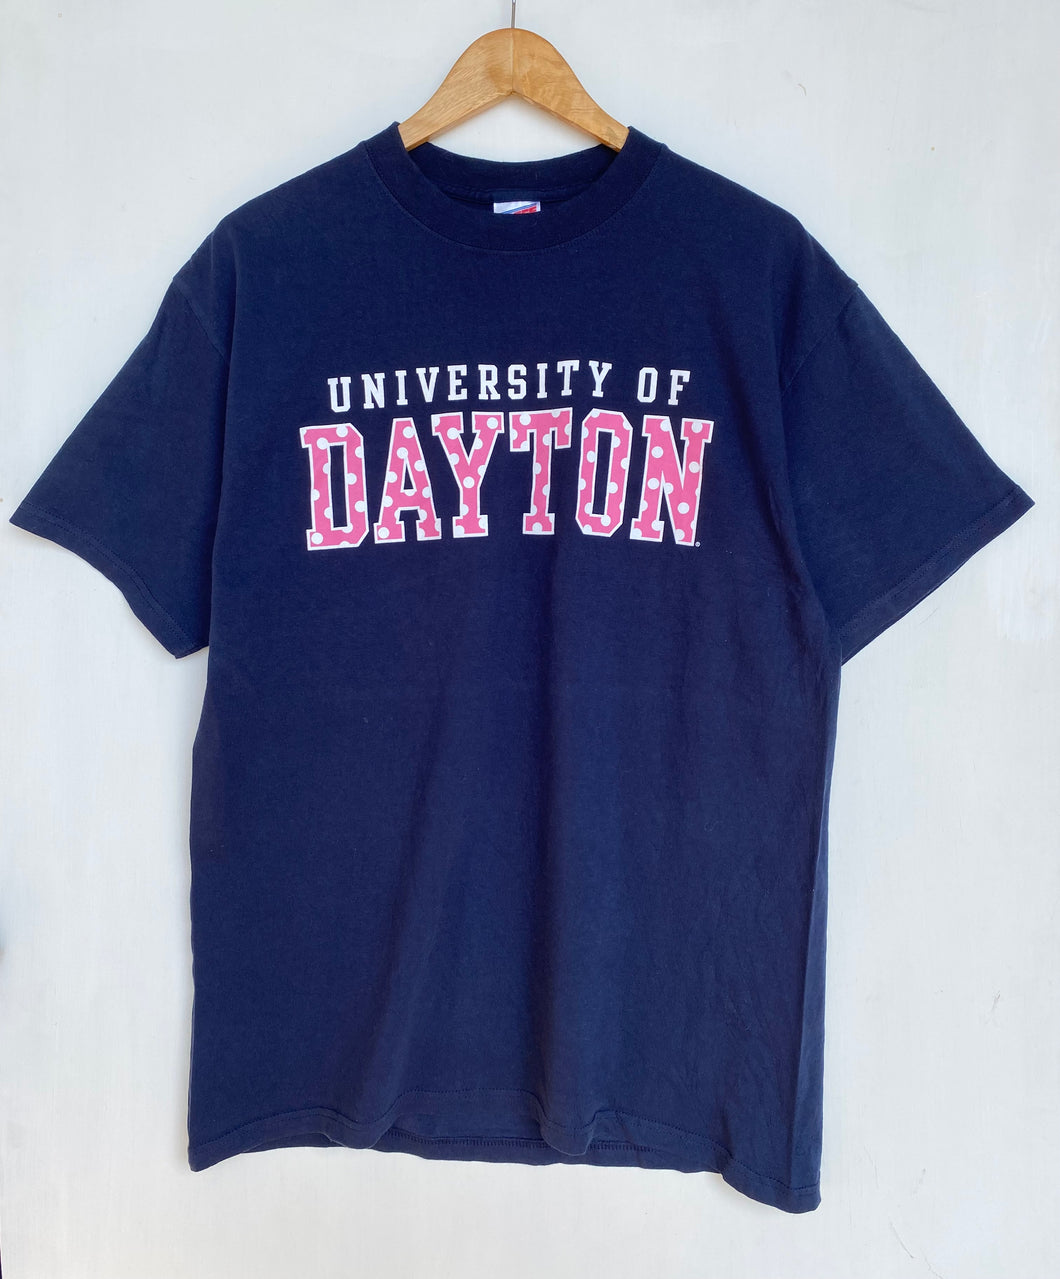 American College t-shirt (L)